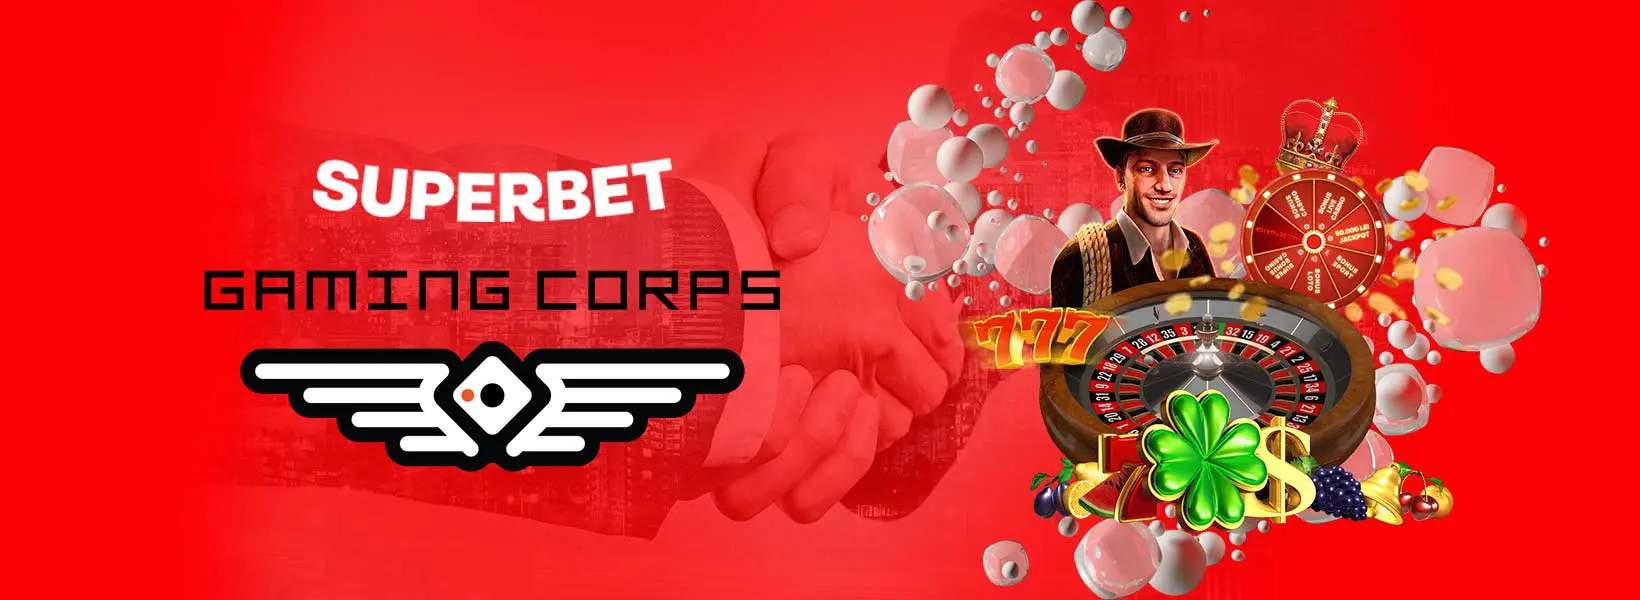 logo gaming corps superbet